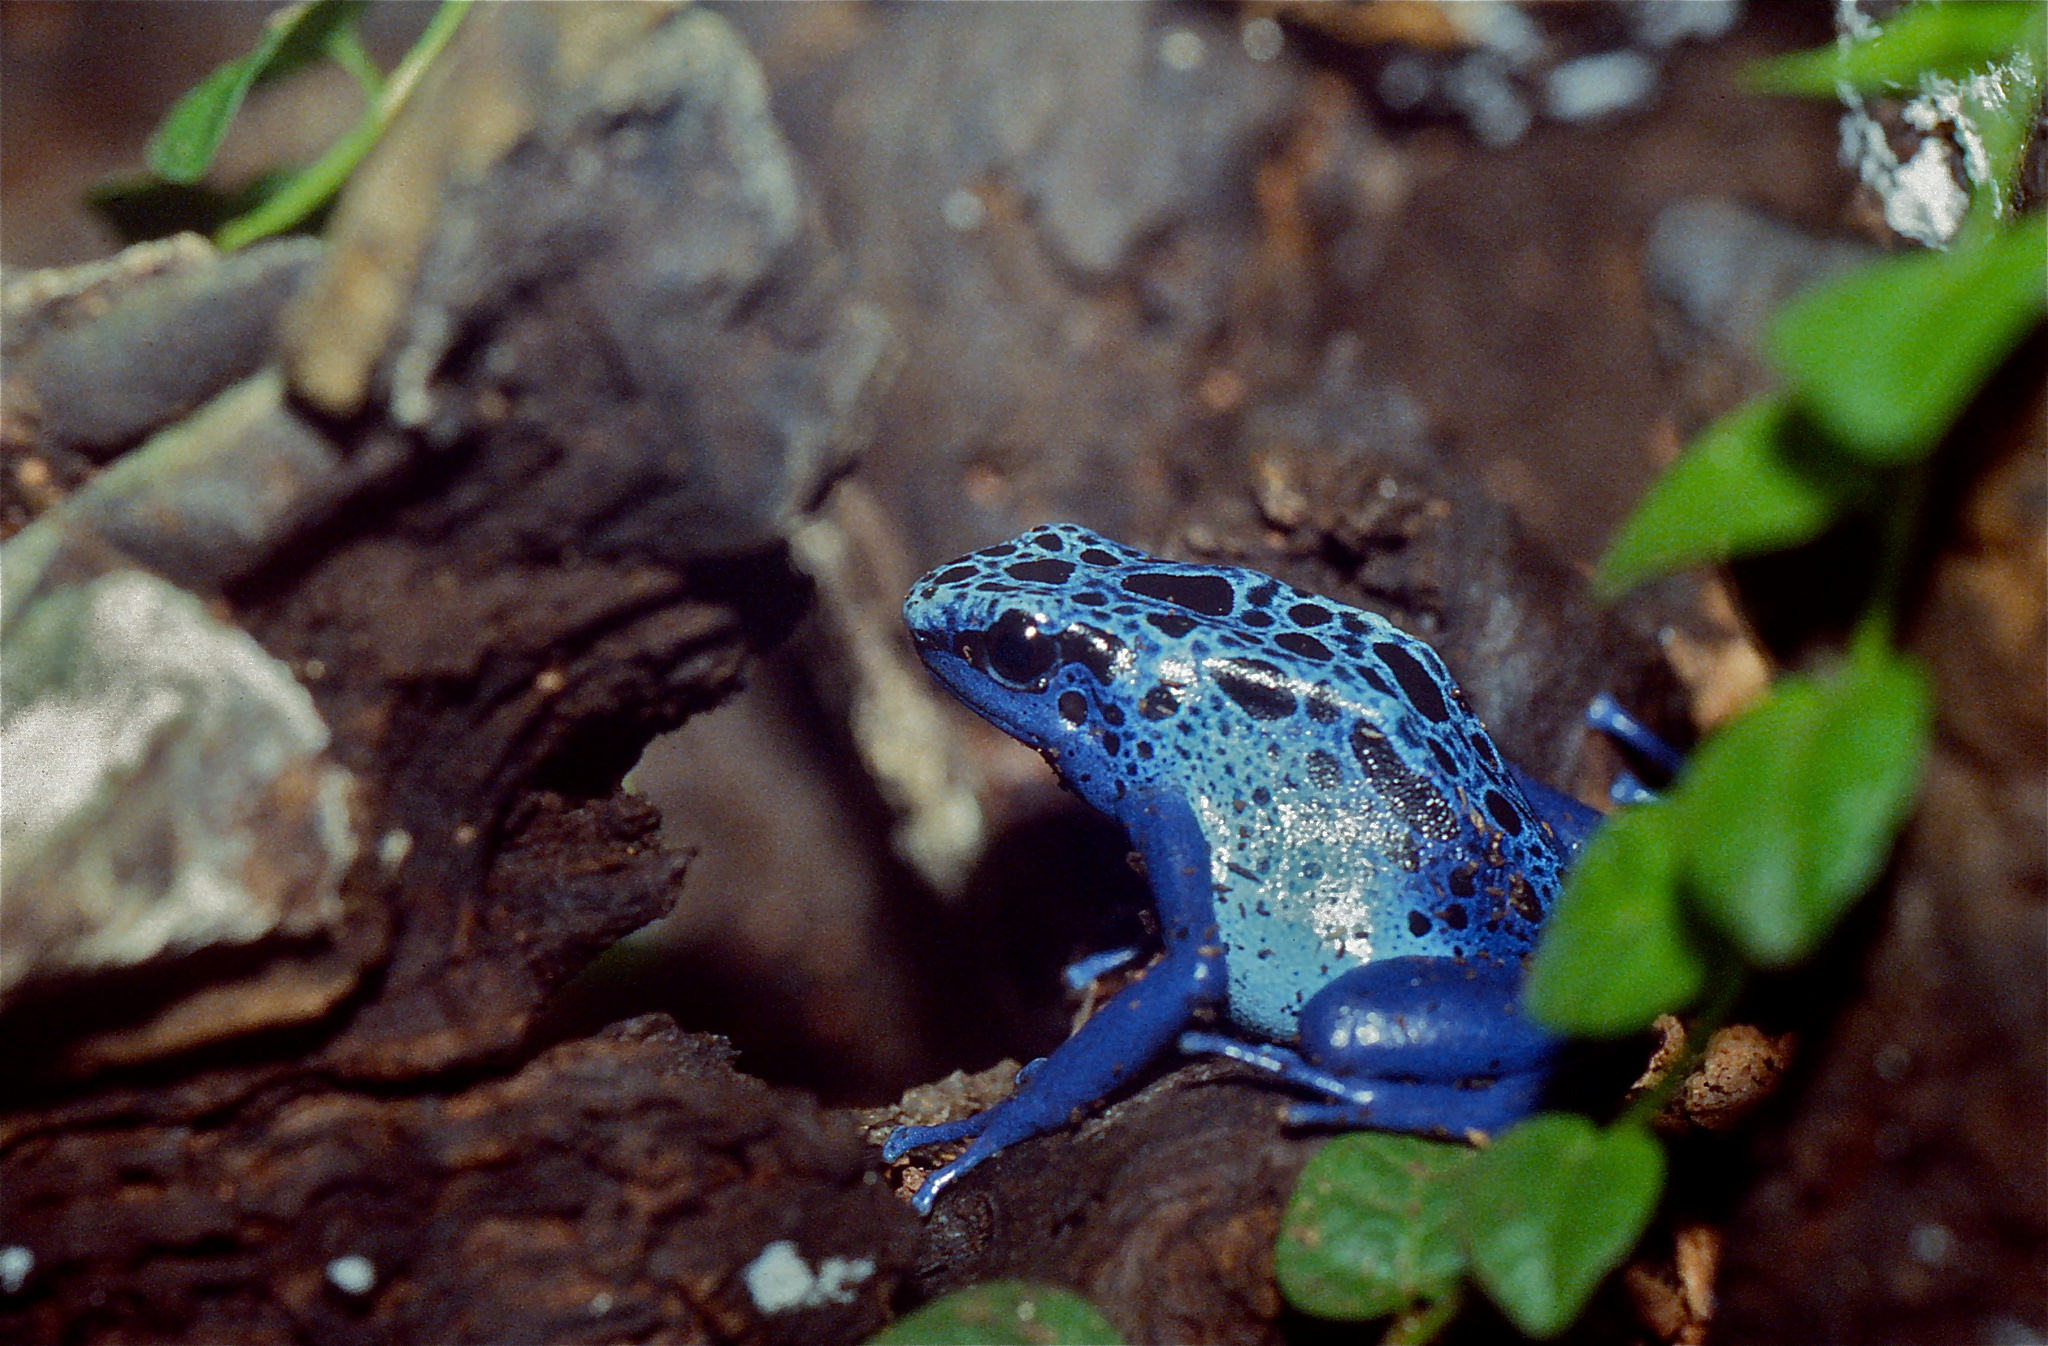 Dyeing Dart Frog photo by Bernard Dupont